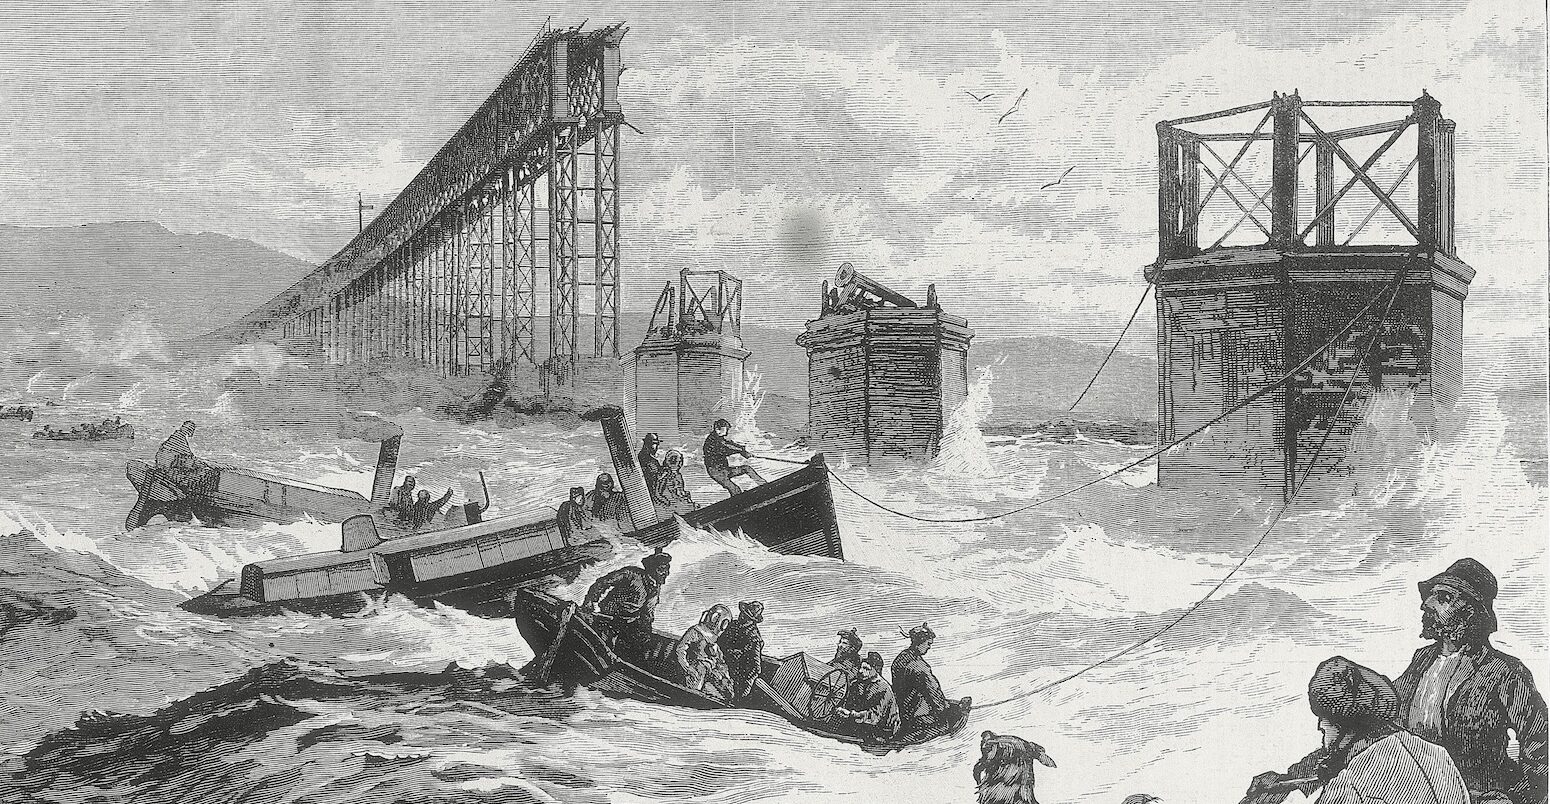 Tay Bridge disaster, 28 December 1879.